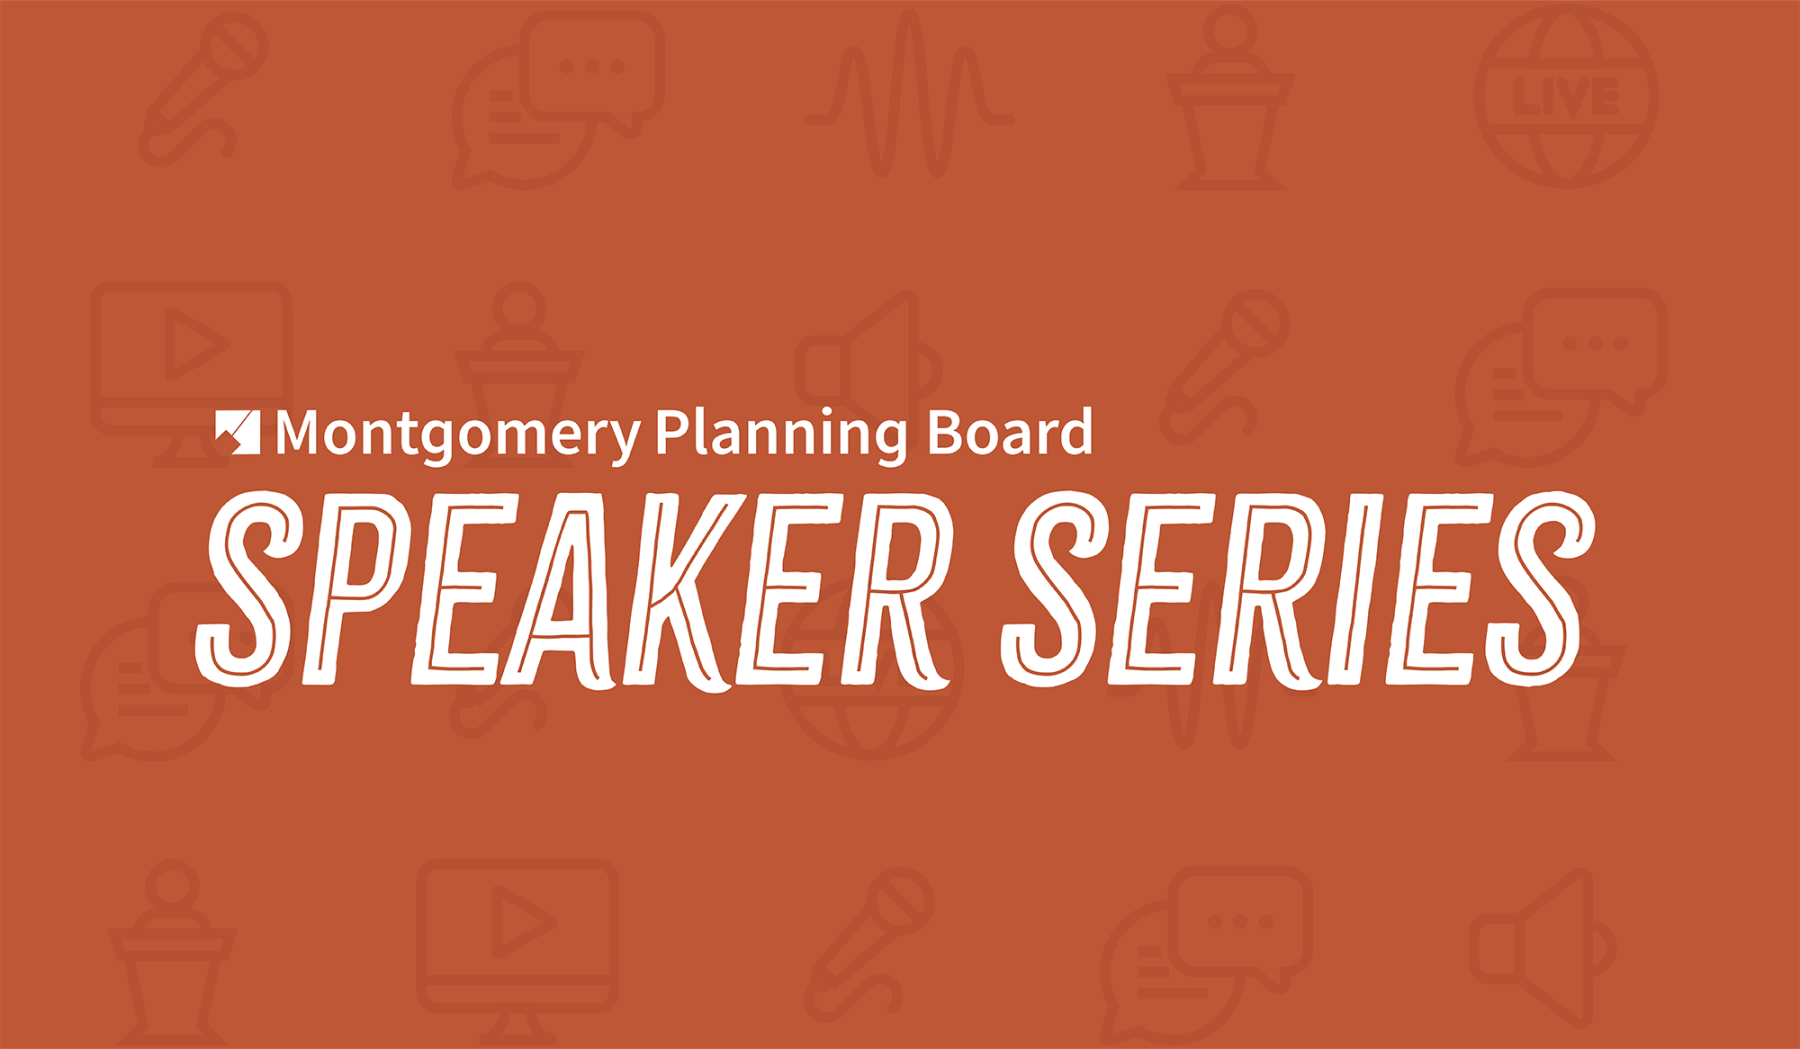 Montgomery Planning Board Speaker Series